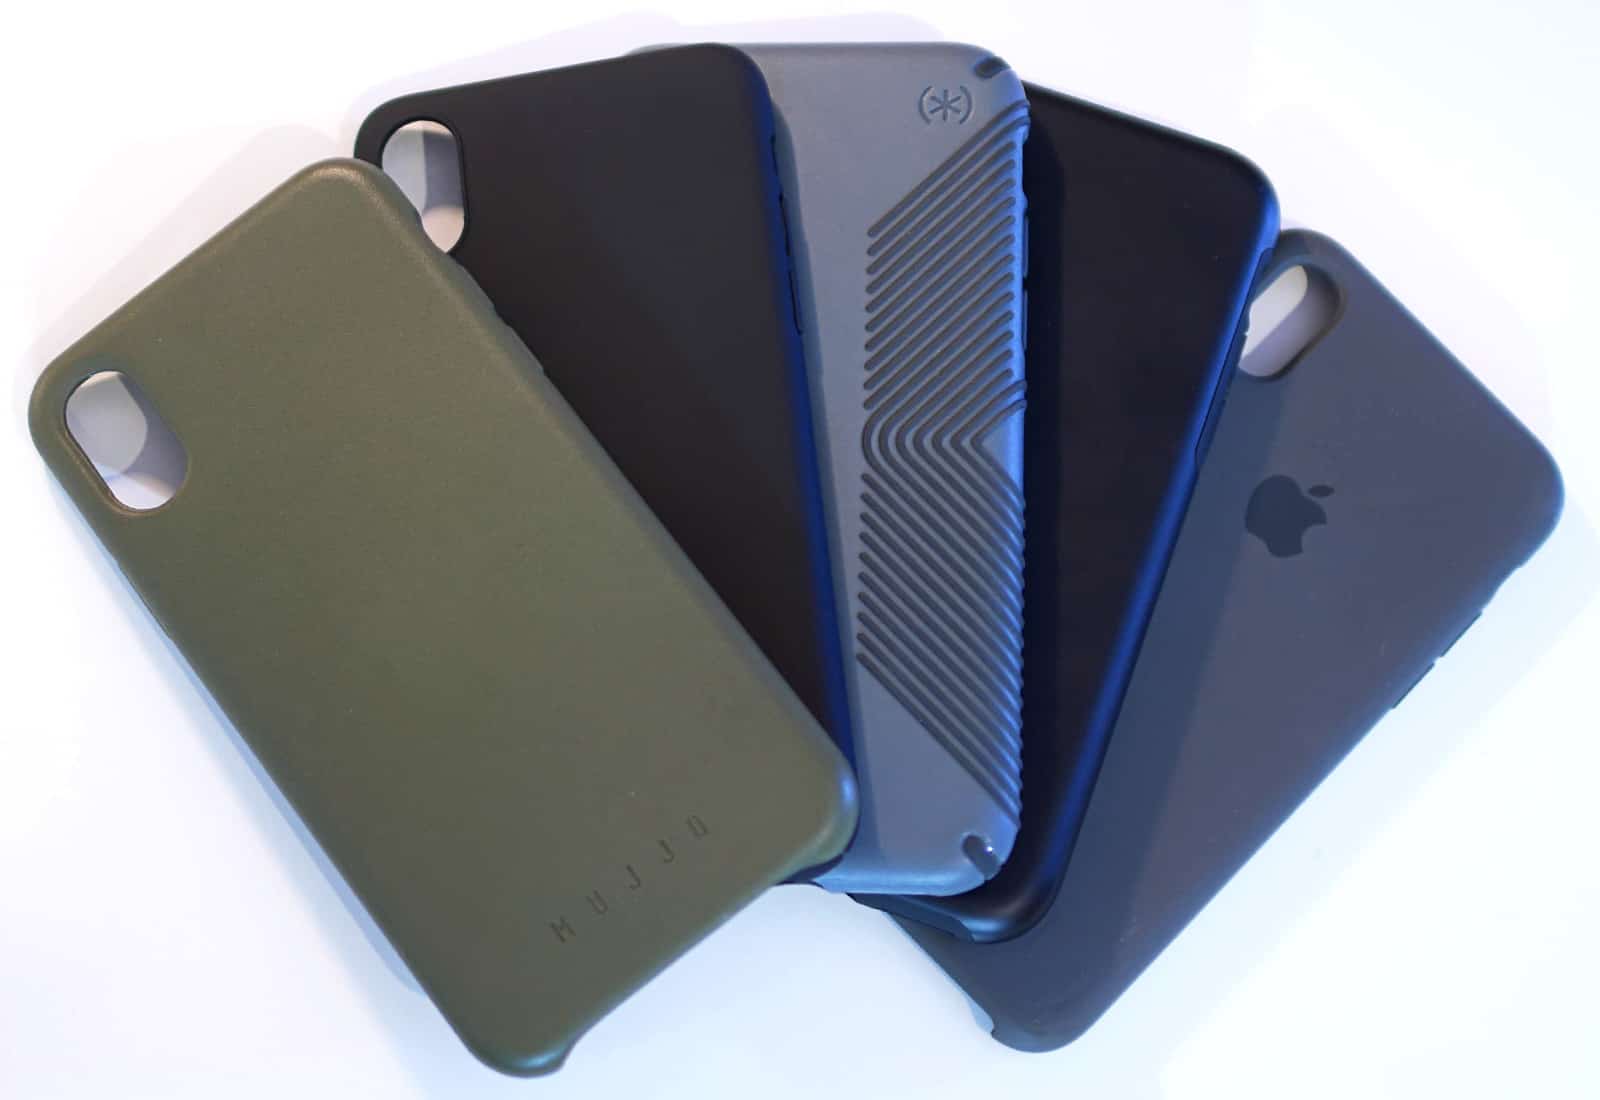 iPhone X case roundup